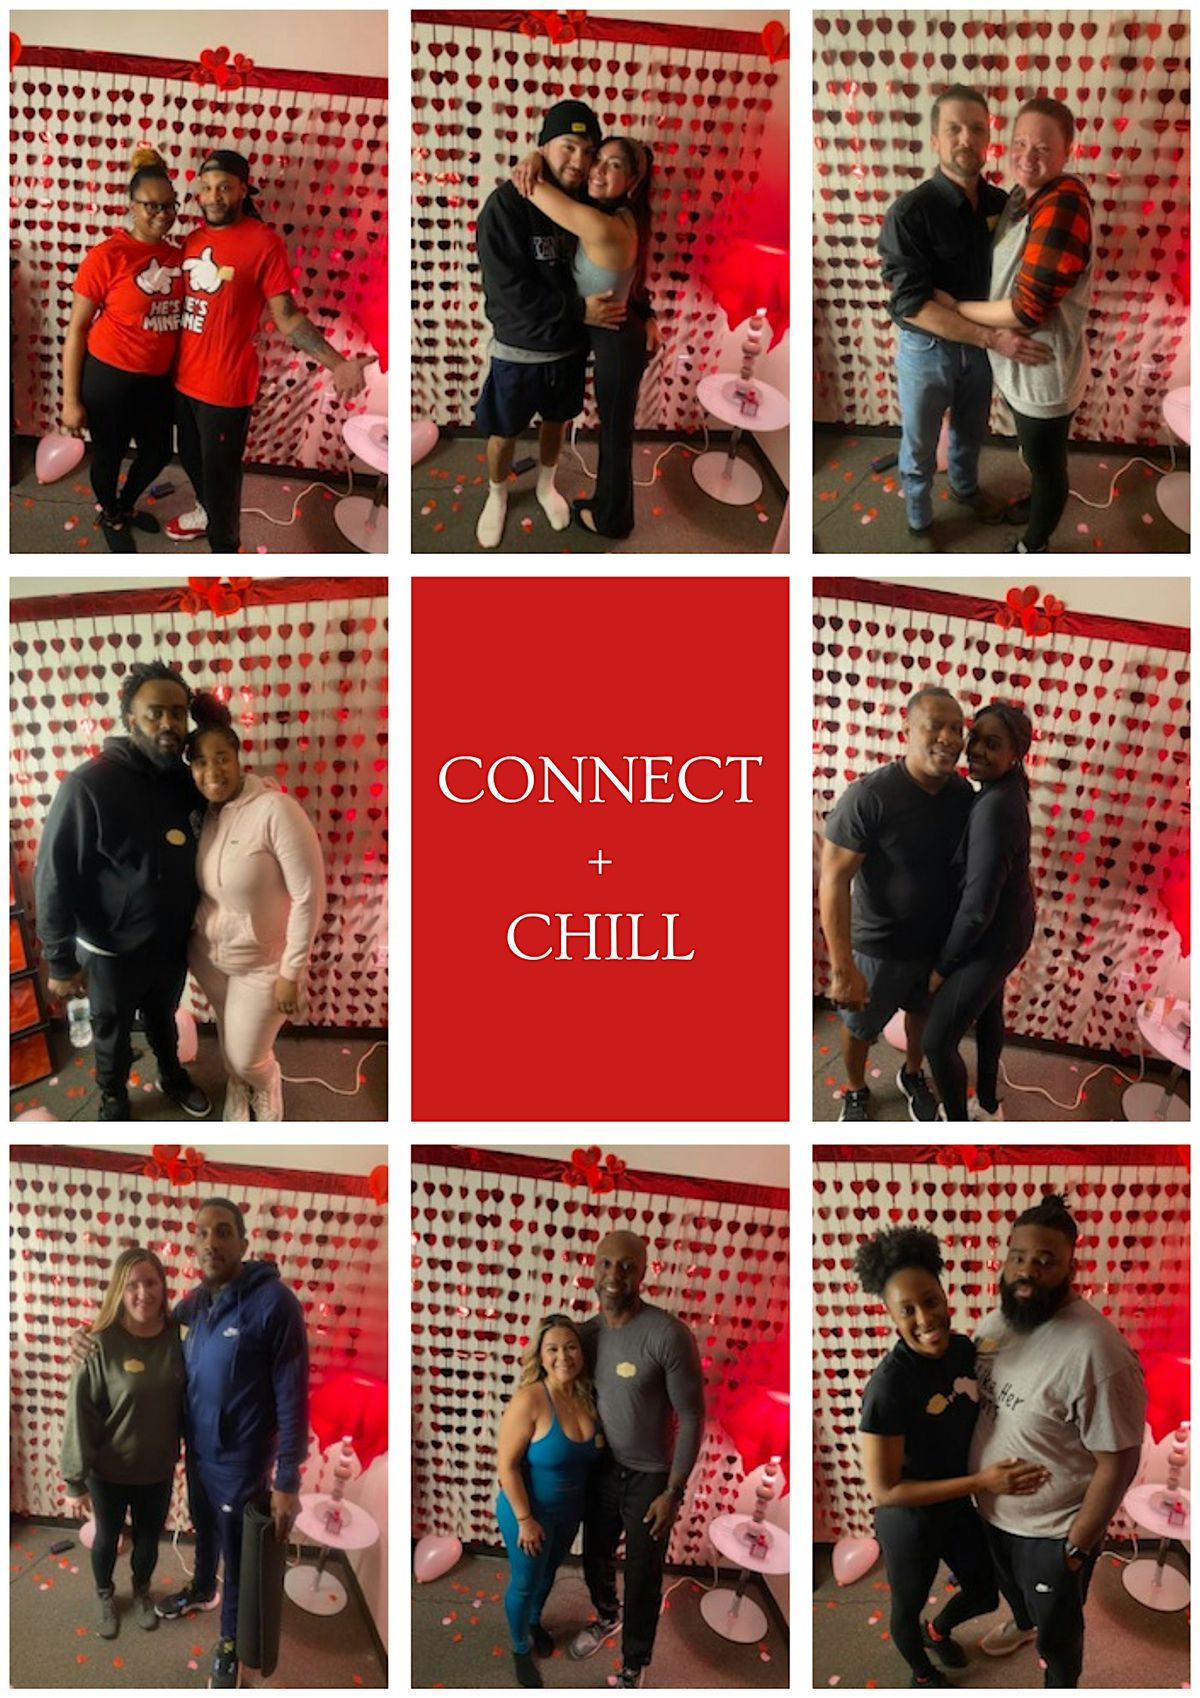 Connect + Chill - Partner Yoga + Massage + Sip Workshop